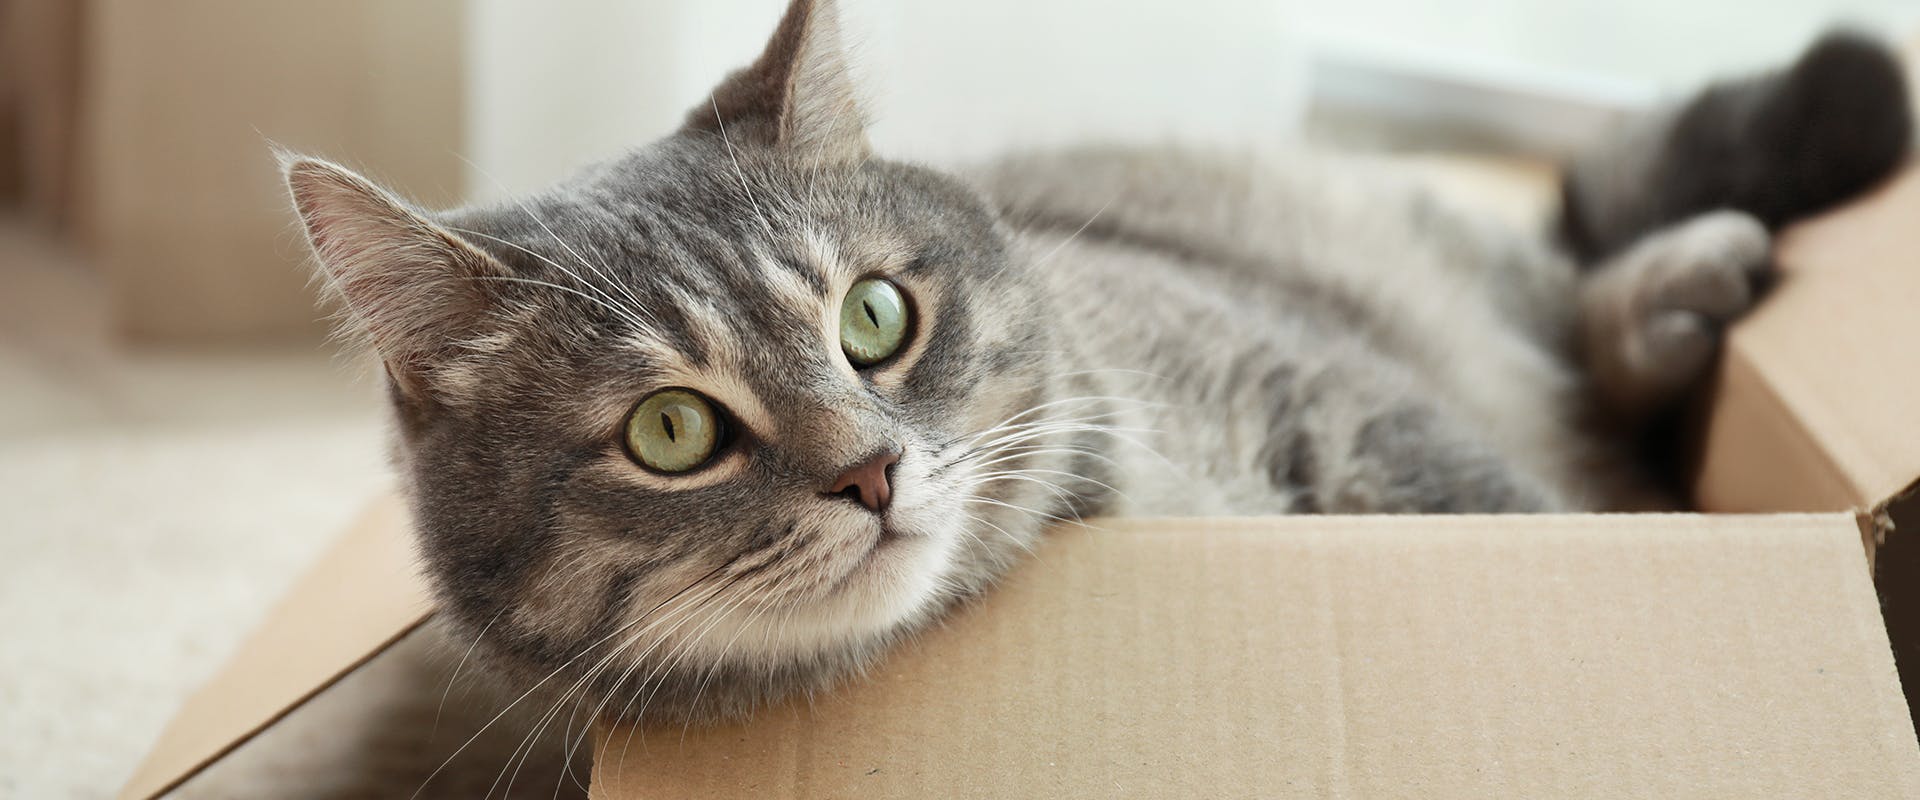 A cat relaxing in a cardboard box